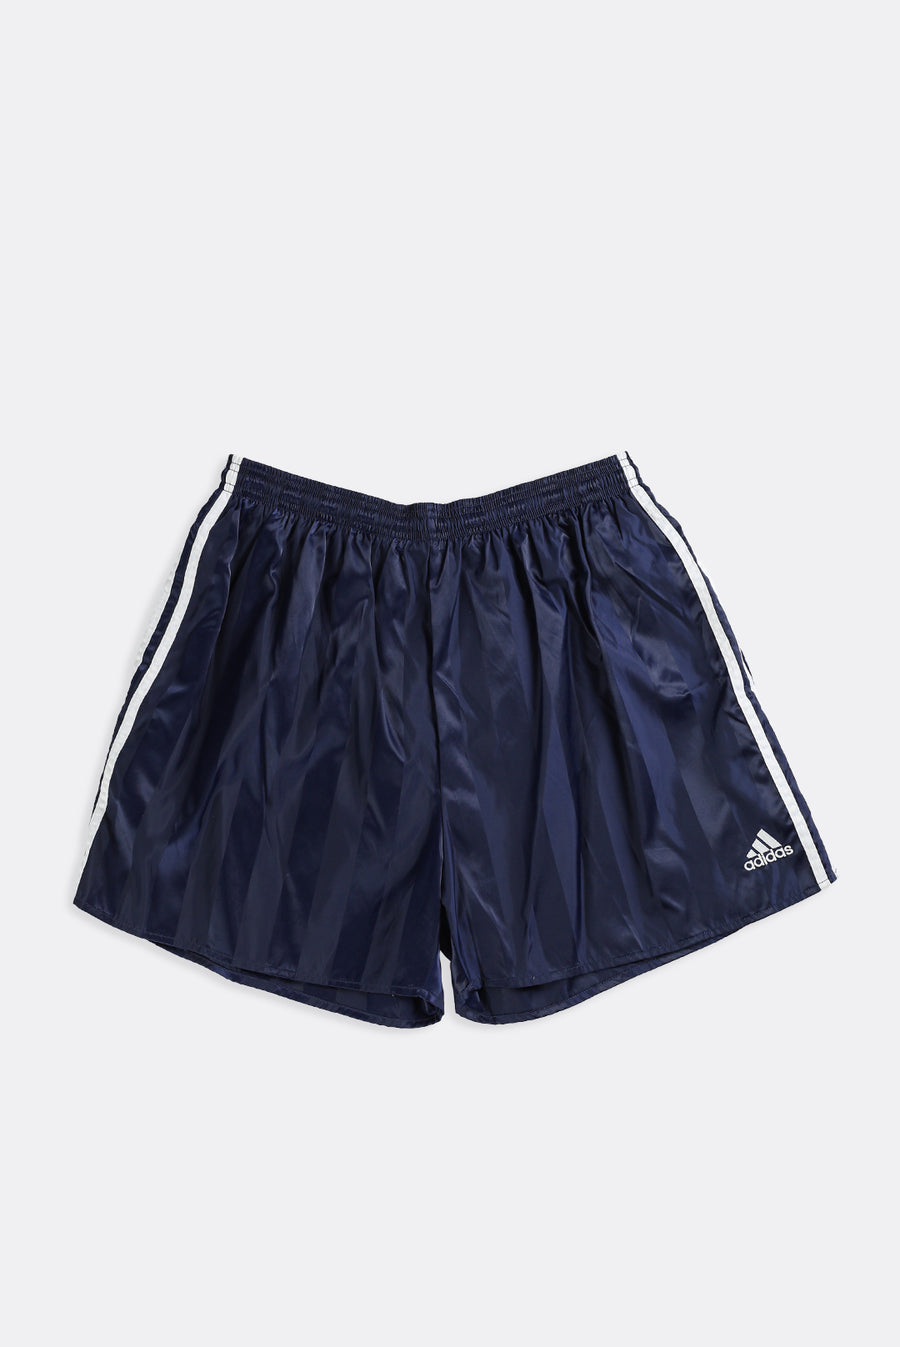 Vintage Adidas Shorts- S, L